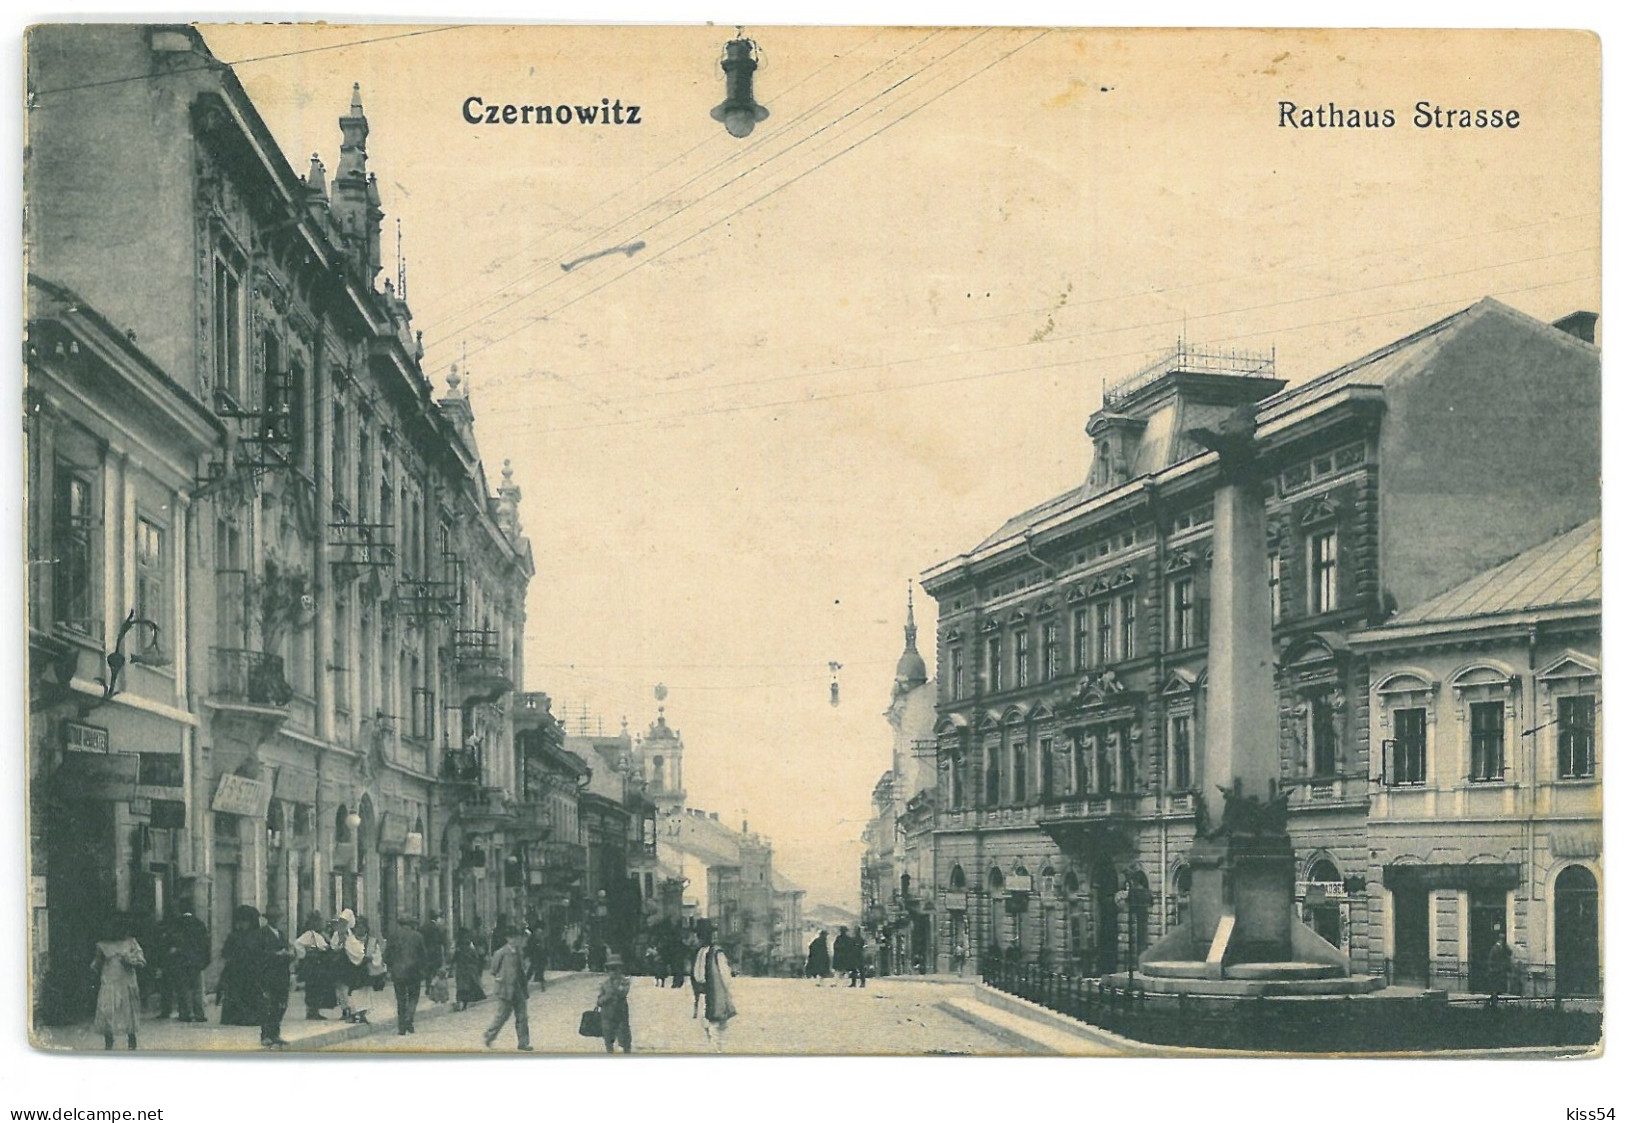 UK 11 - 20069 CZERNOWITZ, Bukowina, Market, Ukraine - Old Postcard - Used - 1912 - Ukraine